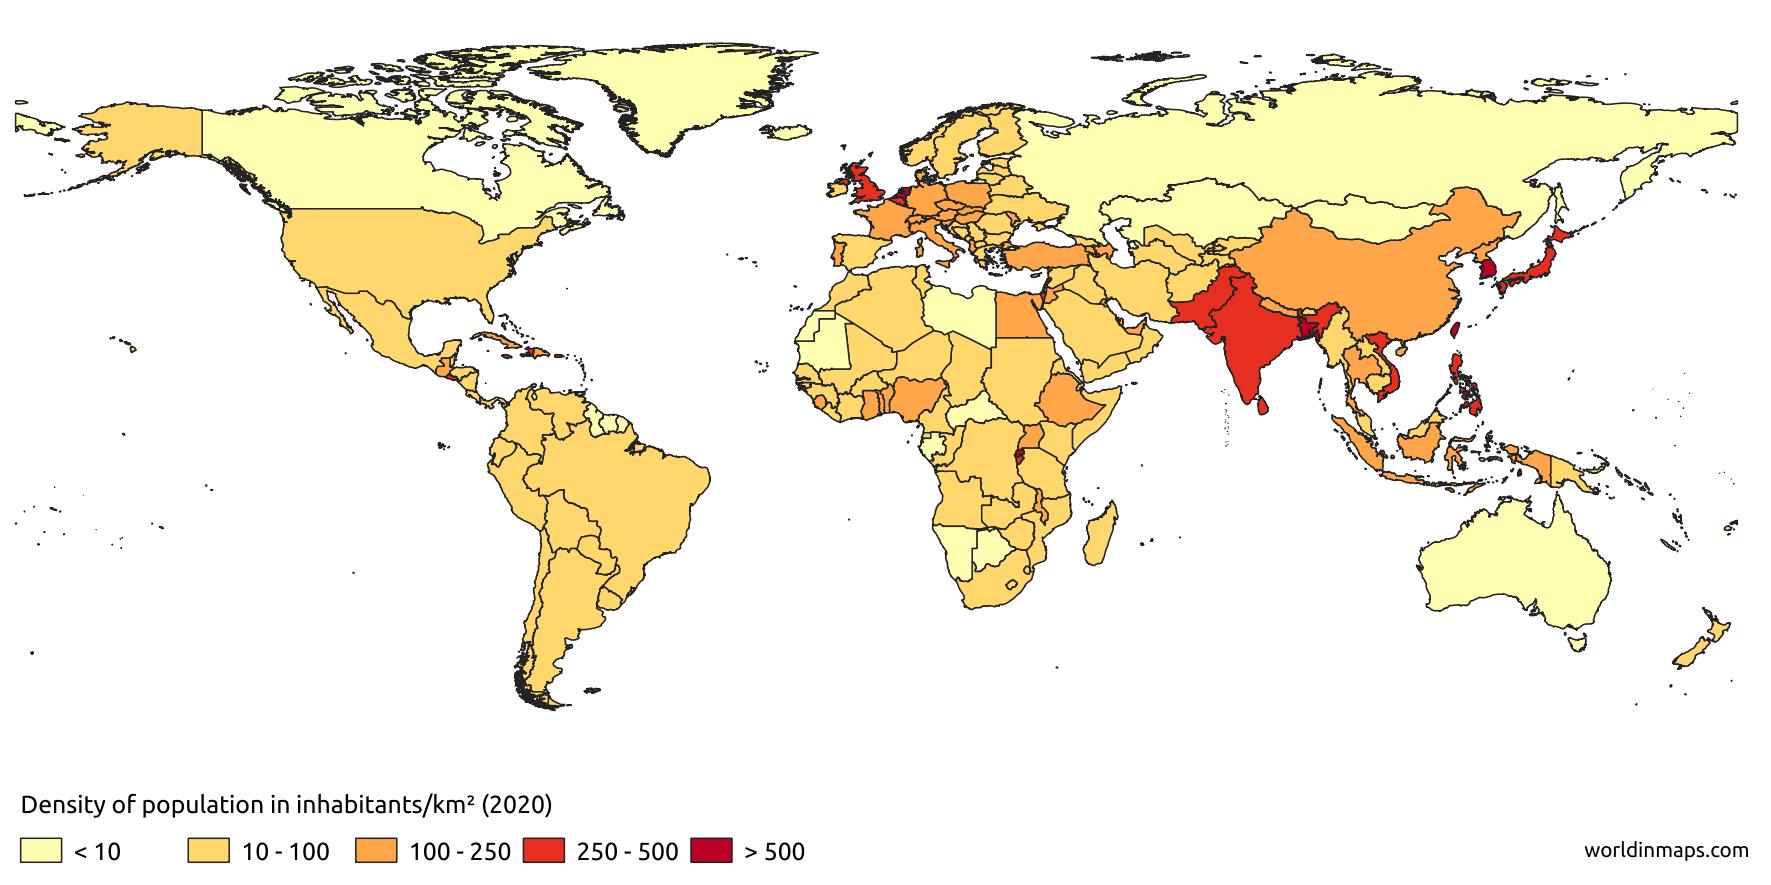 population density of the world